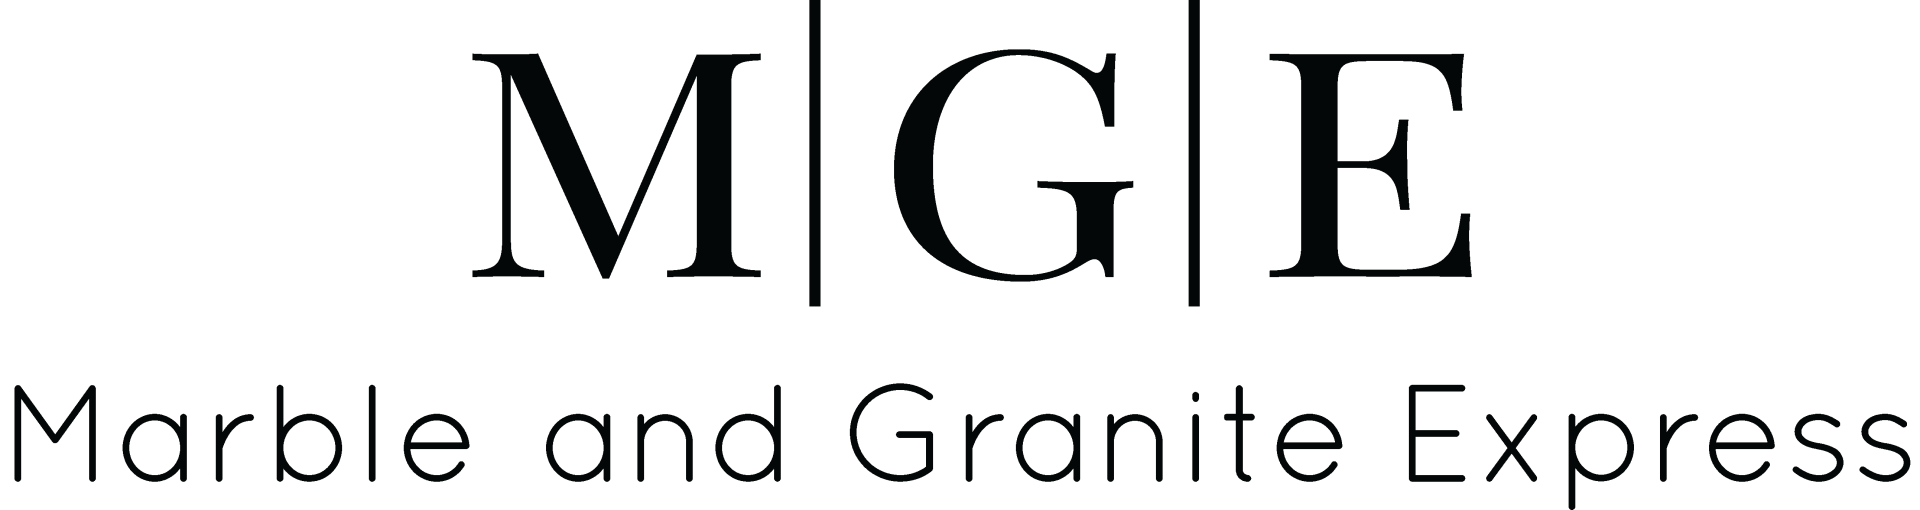 Marble & Granite Express: Michigan Granite And Quartz Countertops